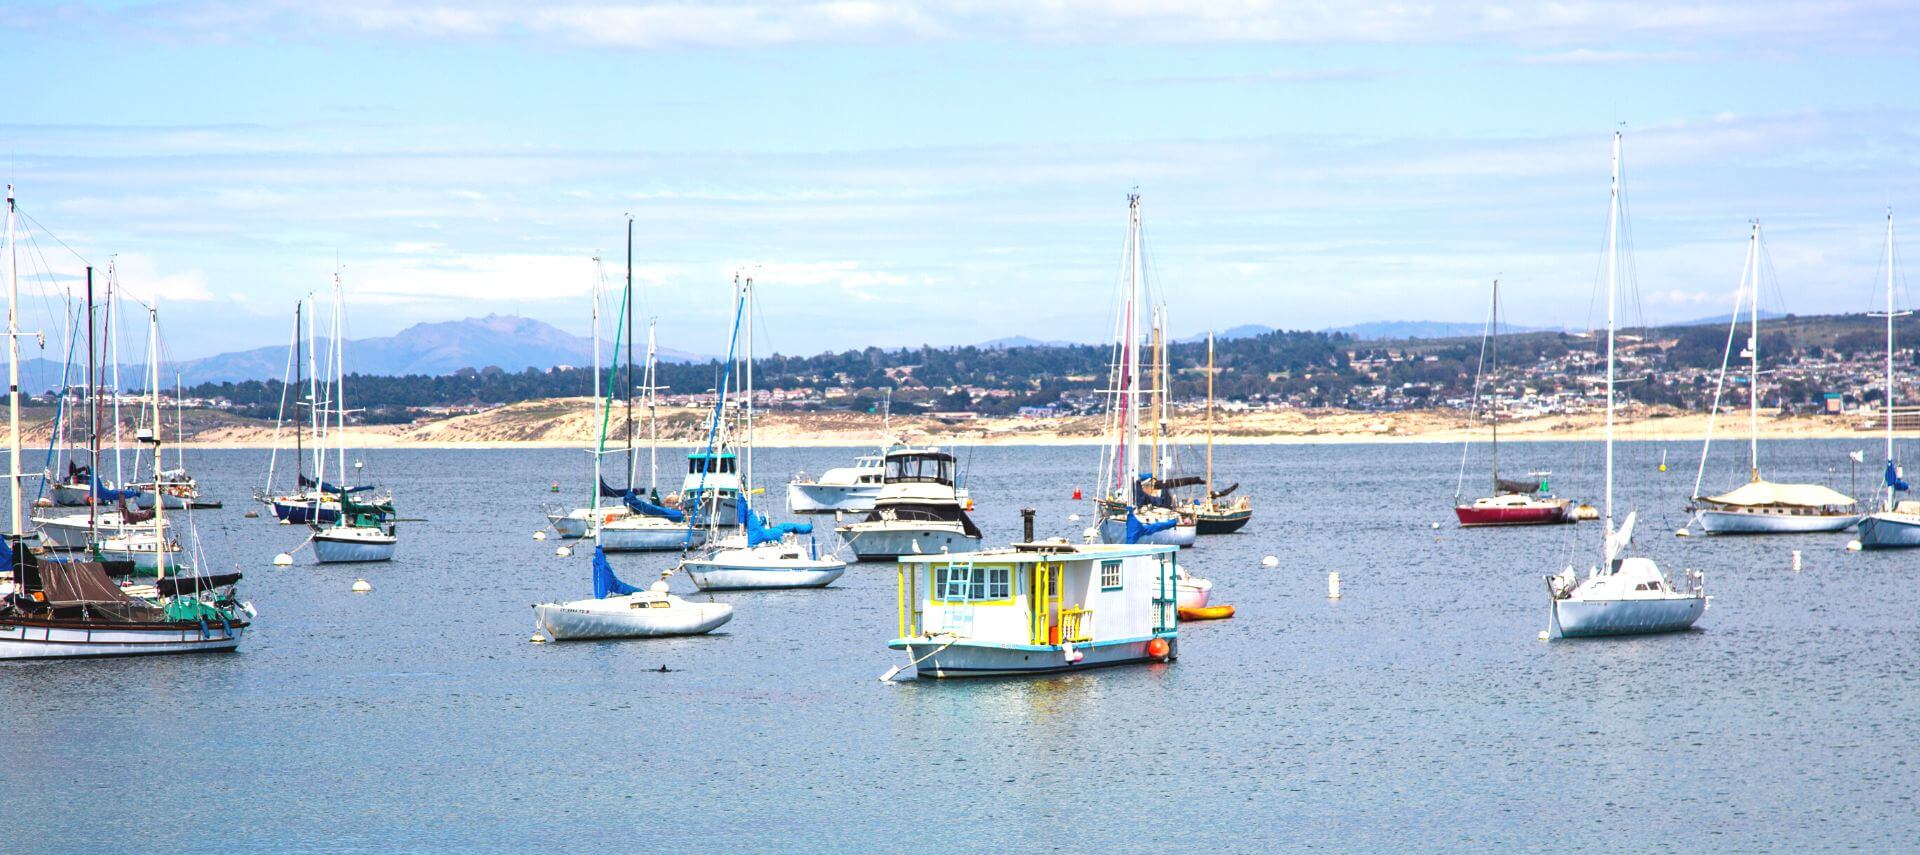 Sailing vessels in Monterey Bay